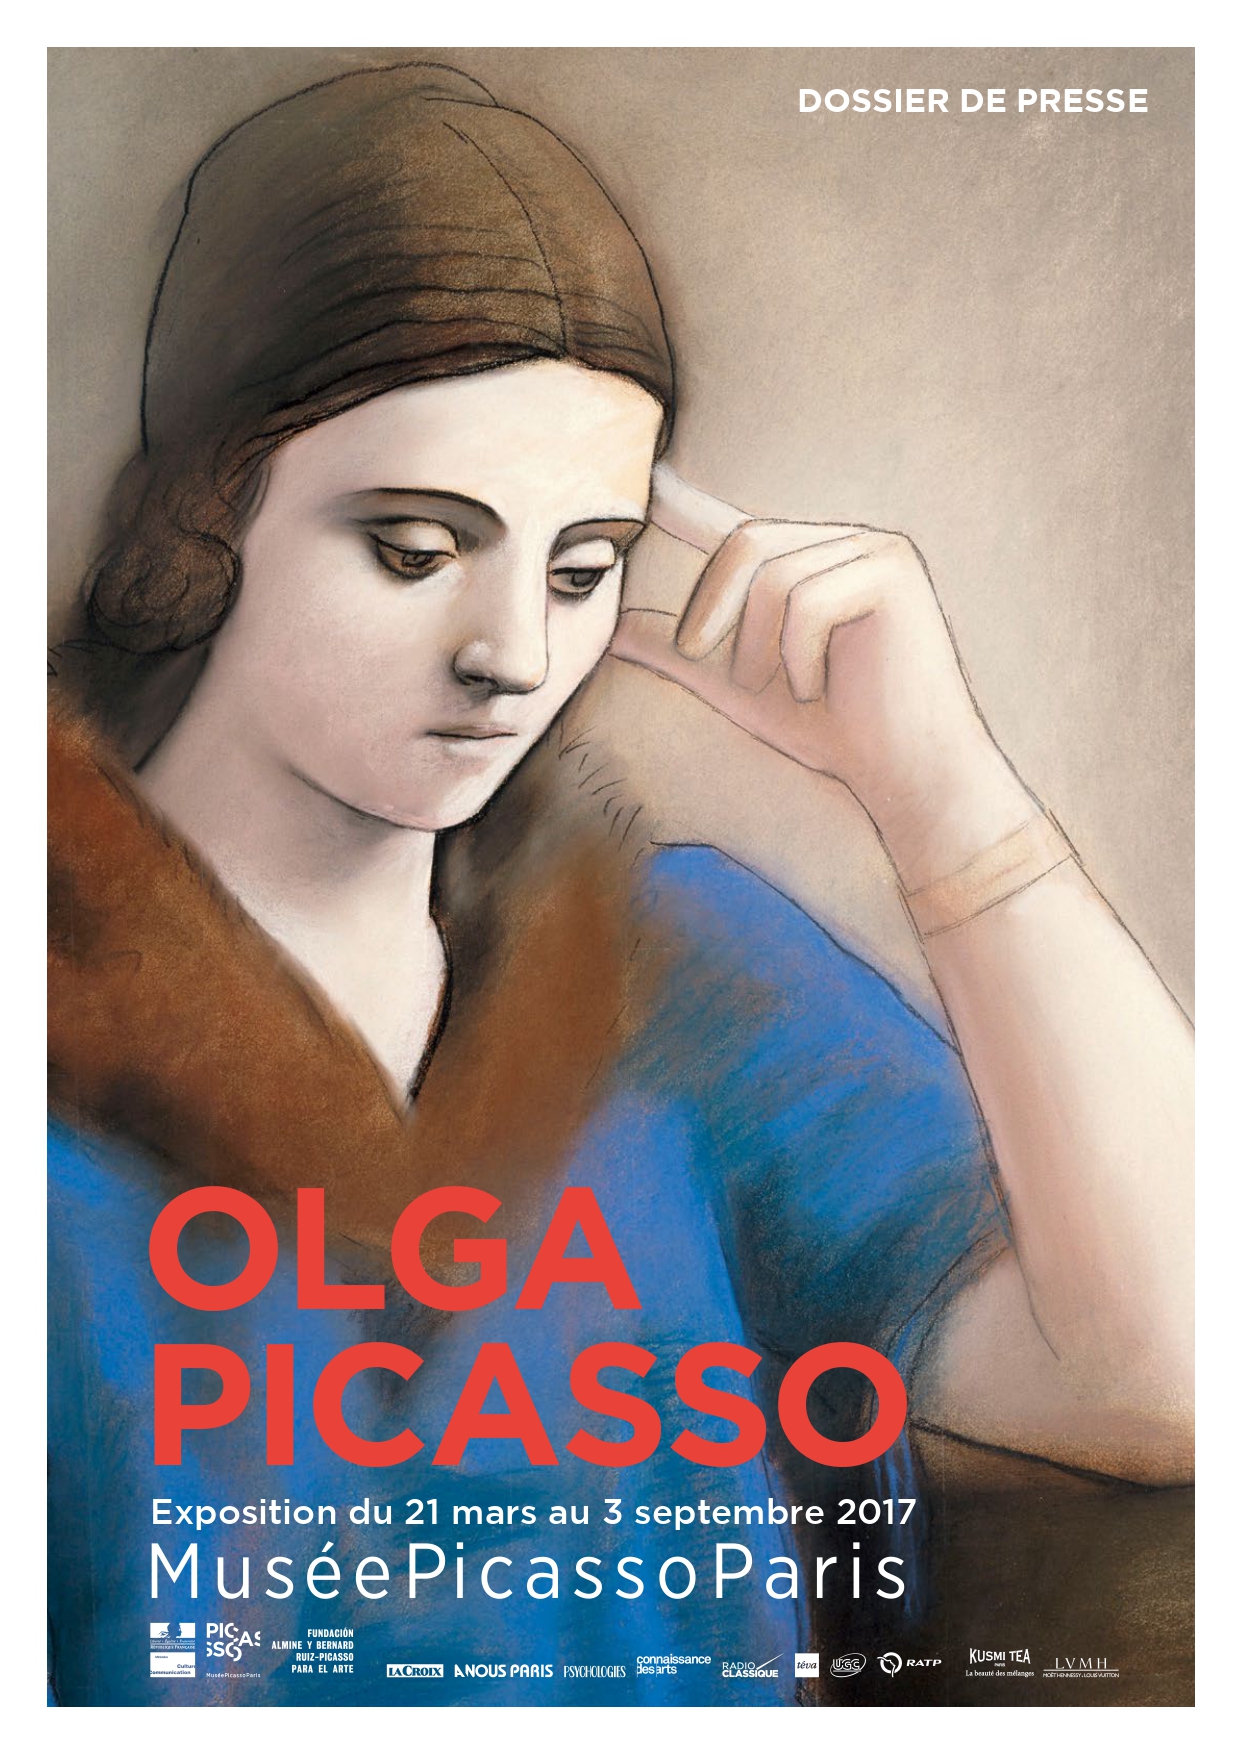 Dossier de presse "Olga Picasso"